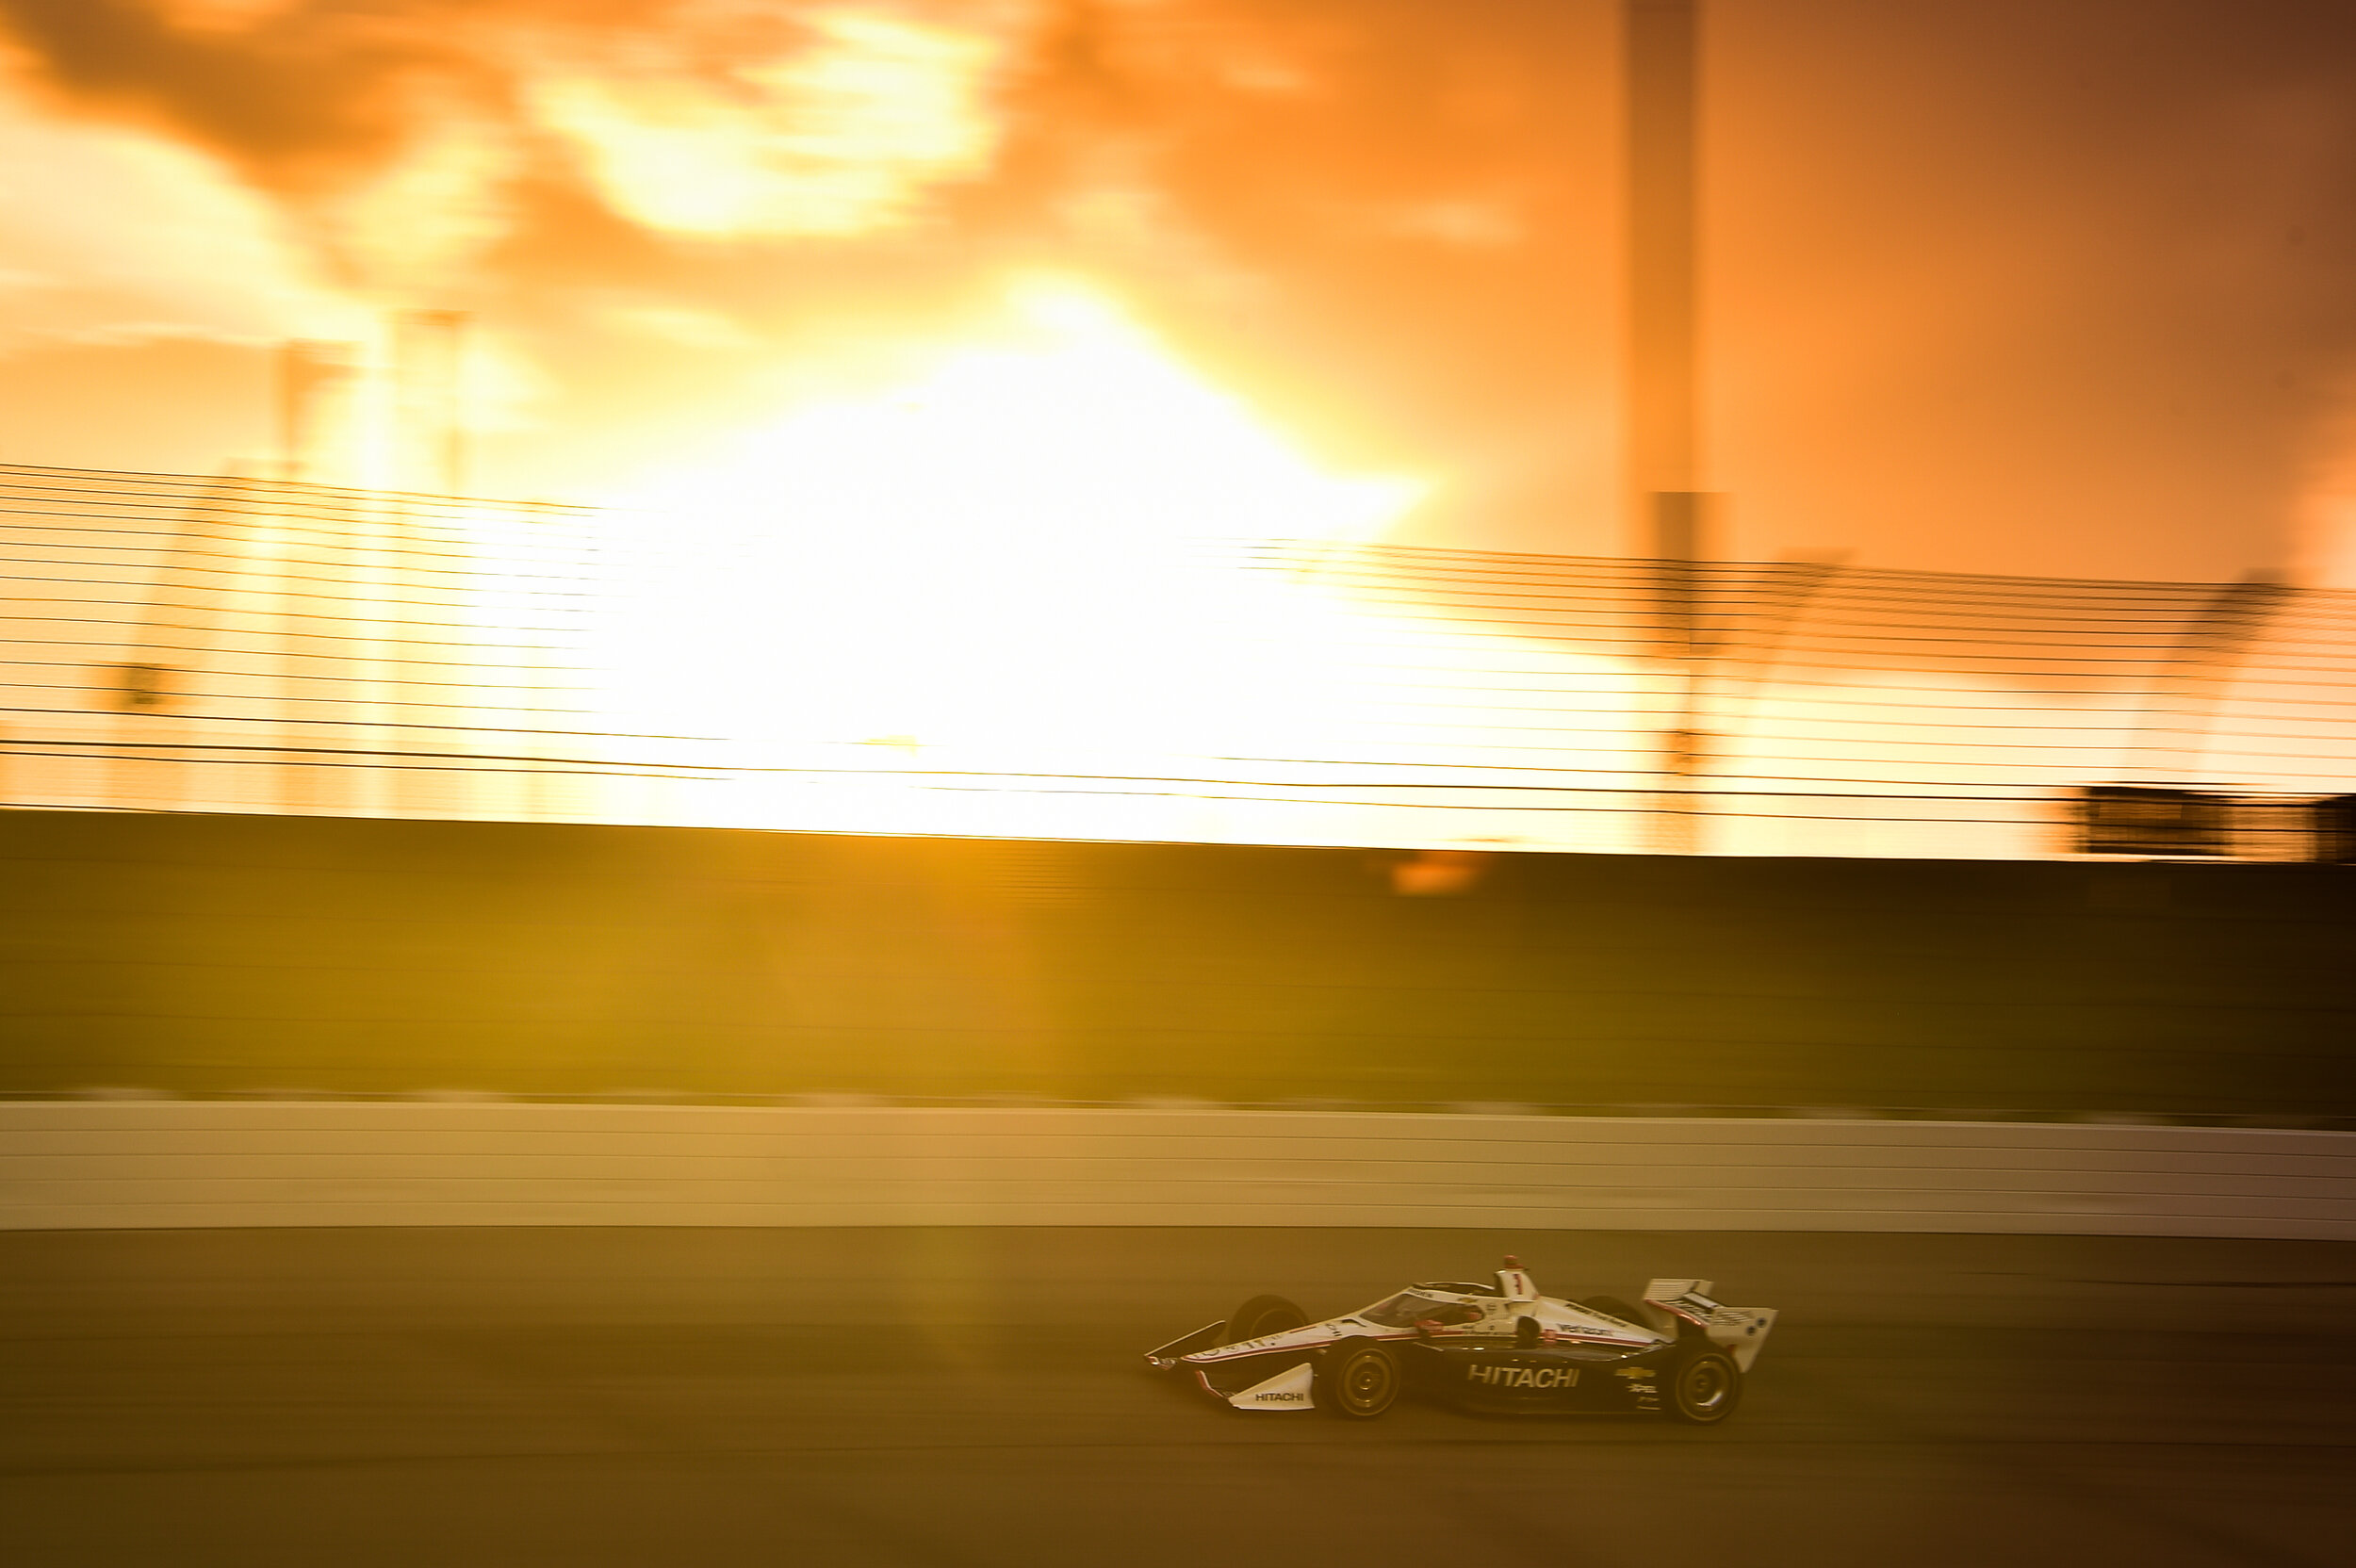  Josef Newgarden races through the beautiful sunset at Iowa Speedway. 